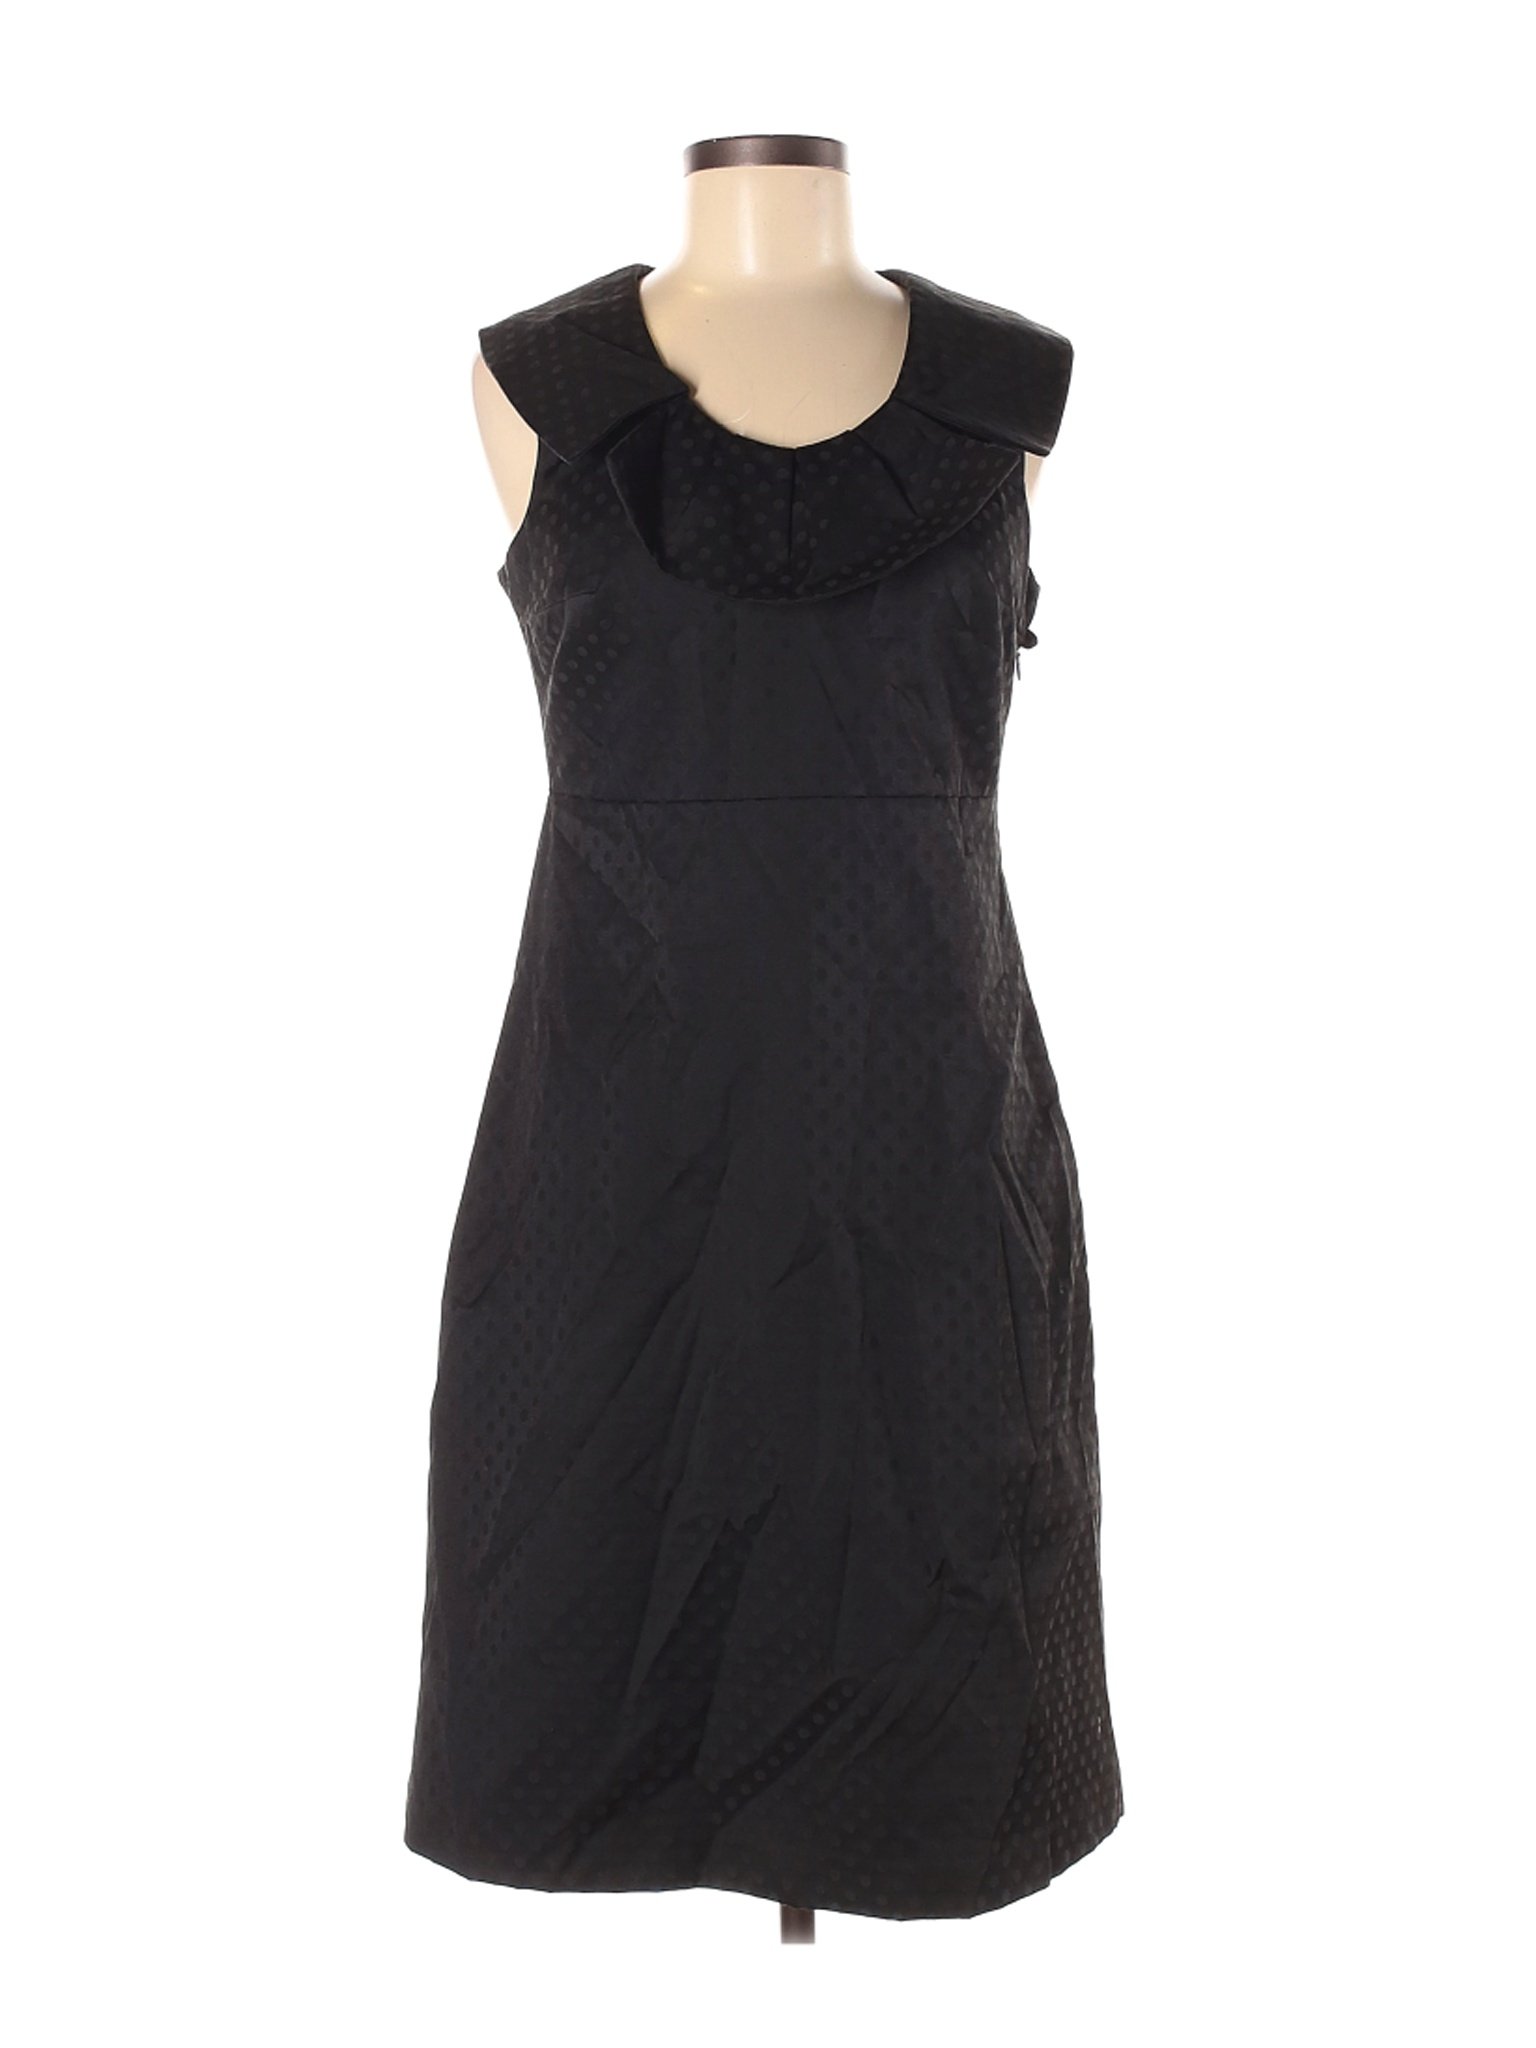 Merona Women Black Cocktail Dress 6 | eBay